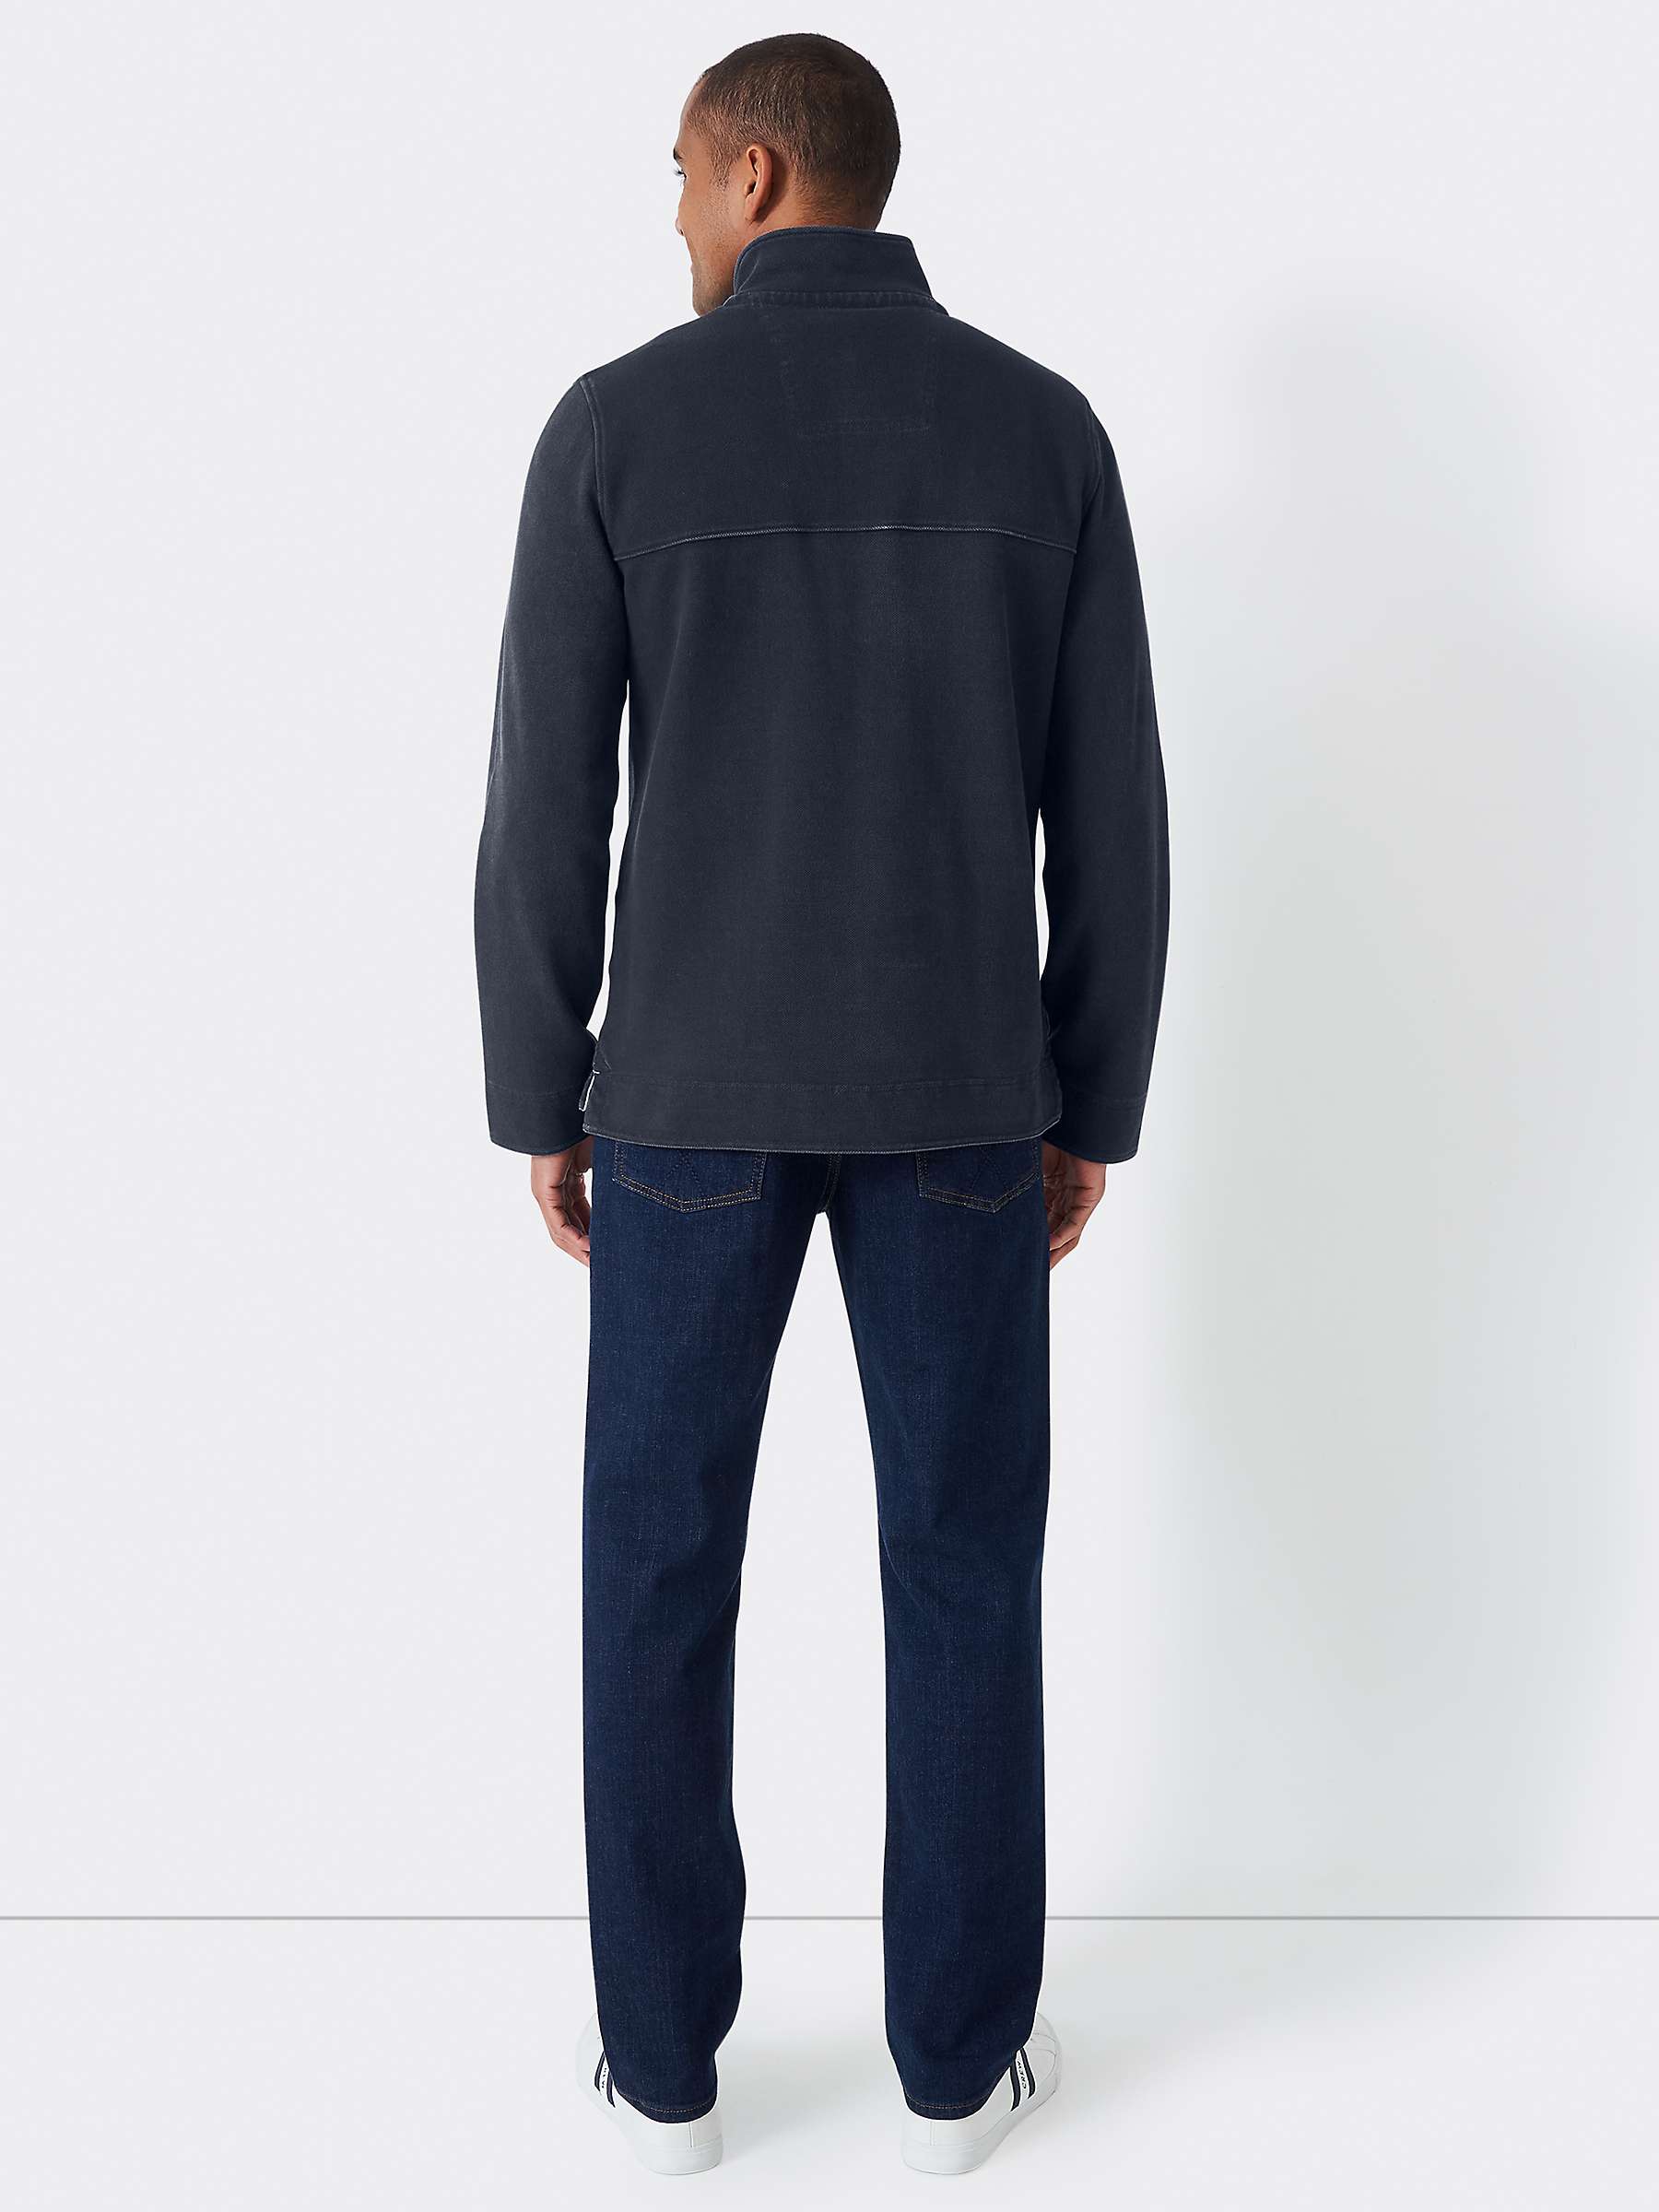 Buy Crew Clothing Padstow Pique Long Sleeve Sweatshirt, Navy Online at johnlewis.com